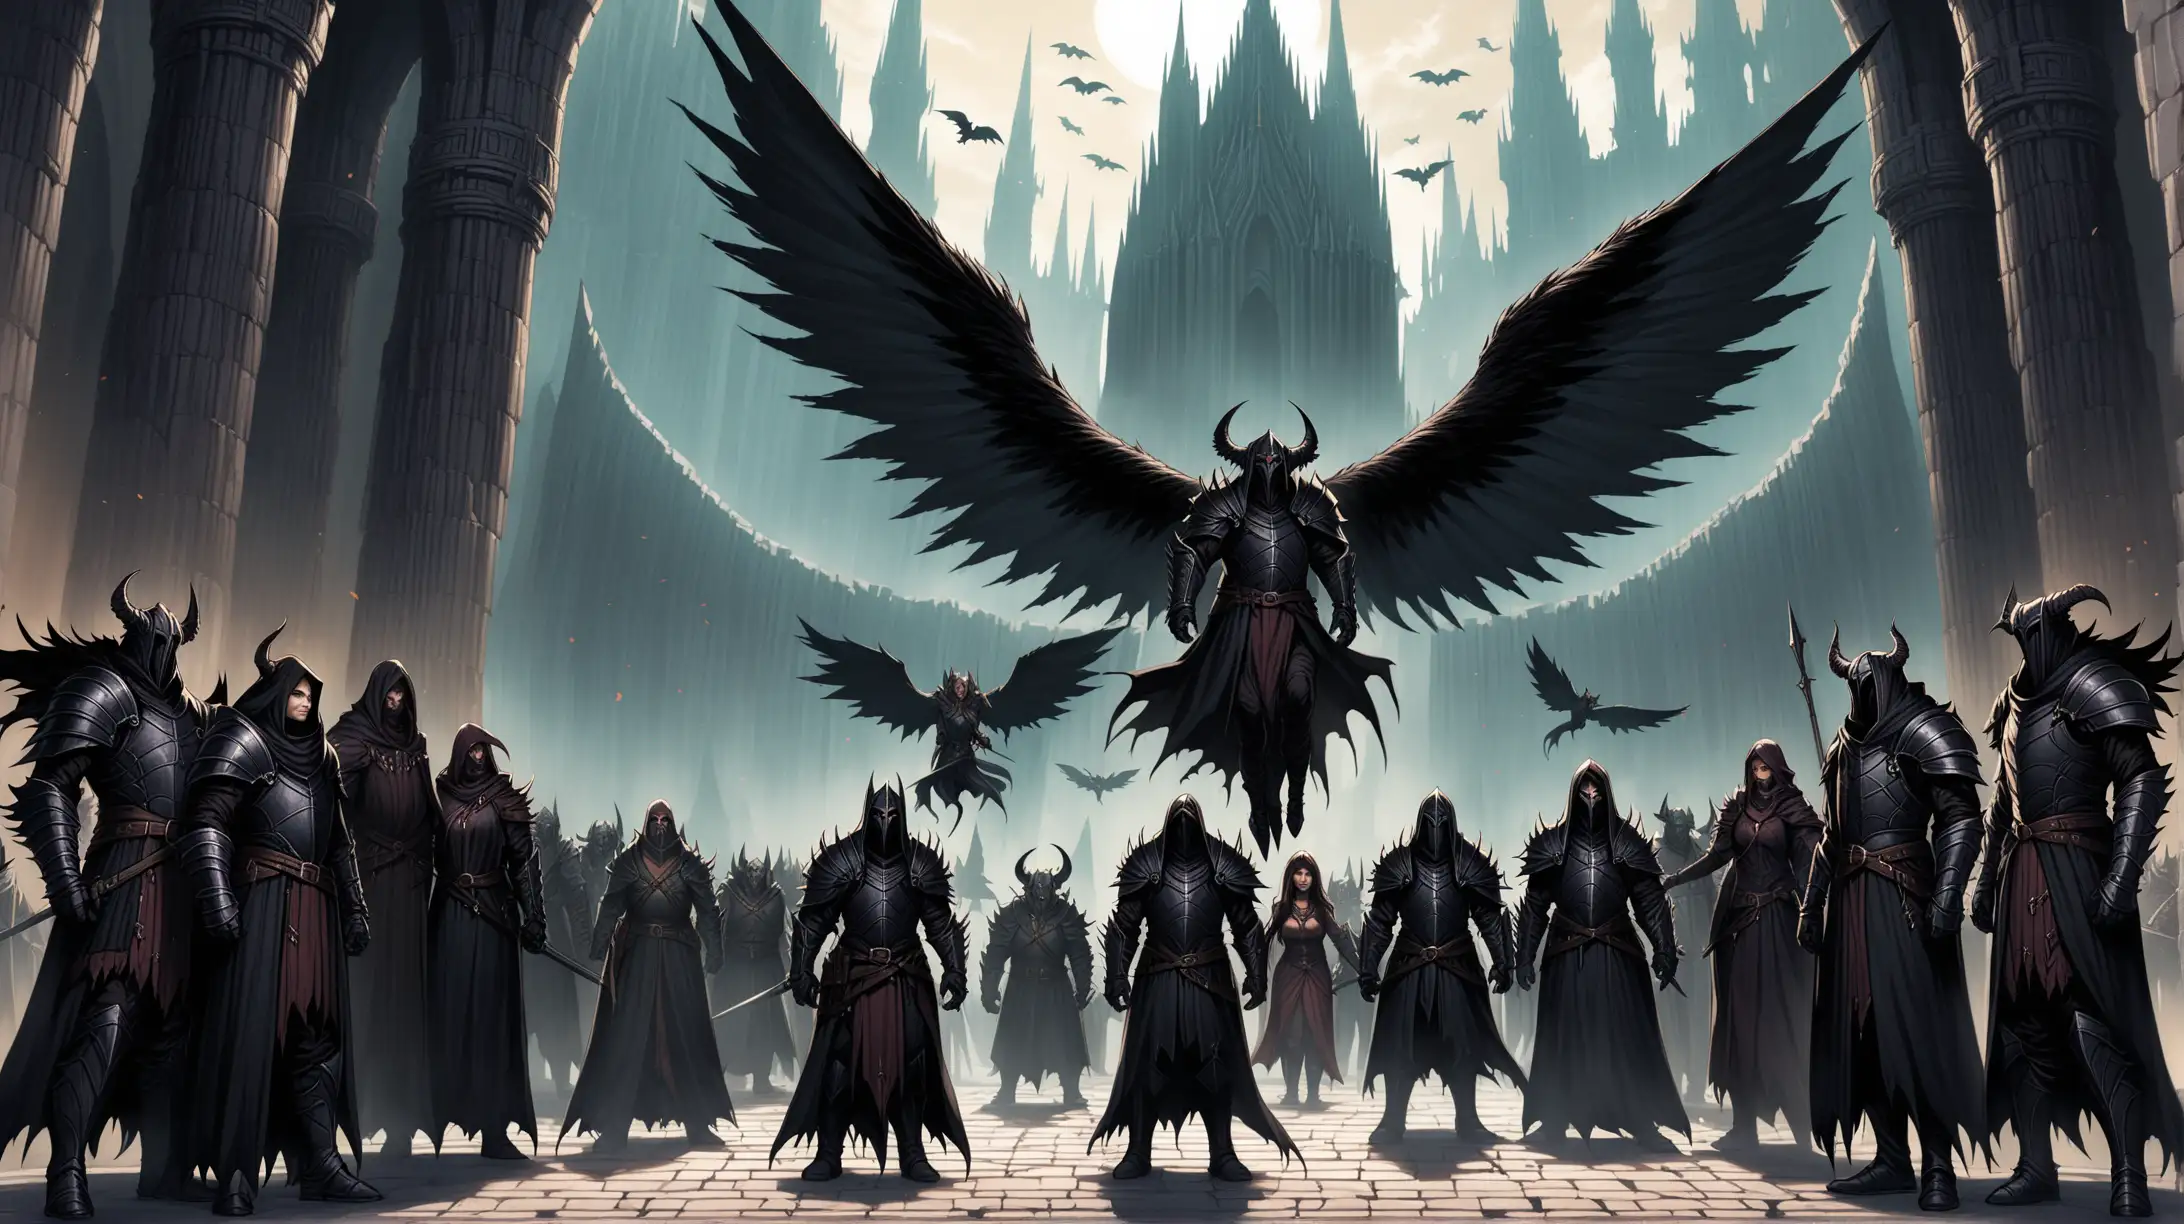 Dark Temple Ritual Warlocks and Dark Knights Summoning with Winged Tieflings in Medieval Fantasy Setting